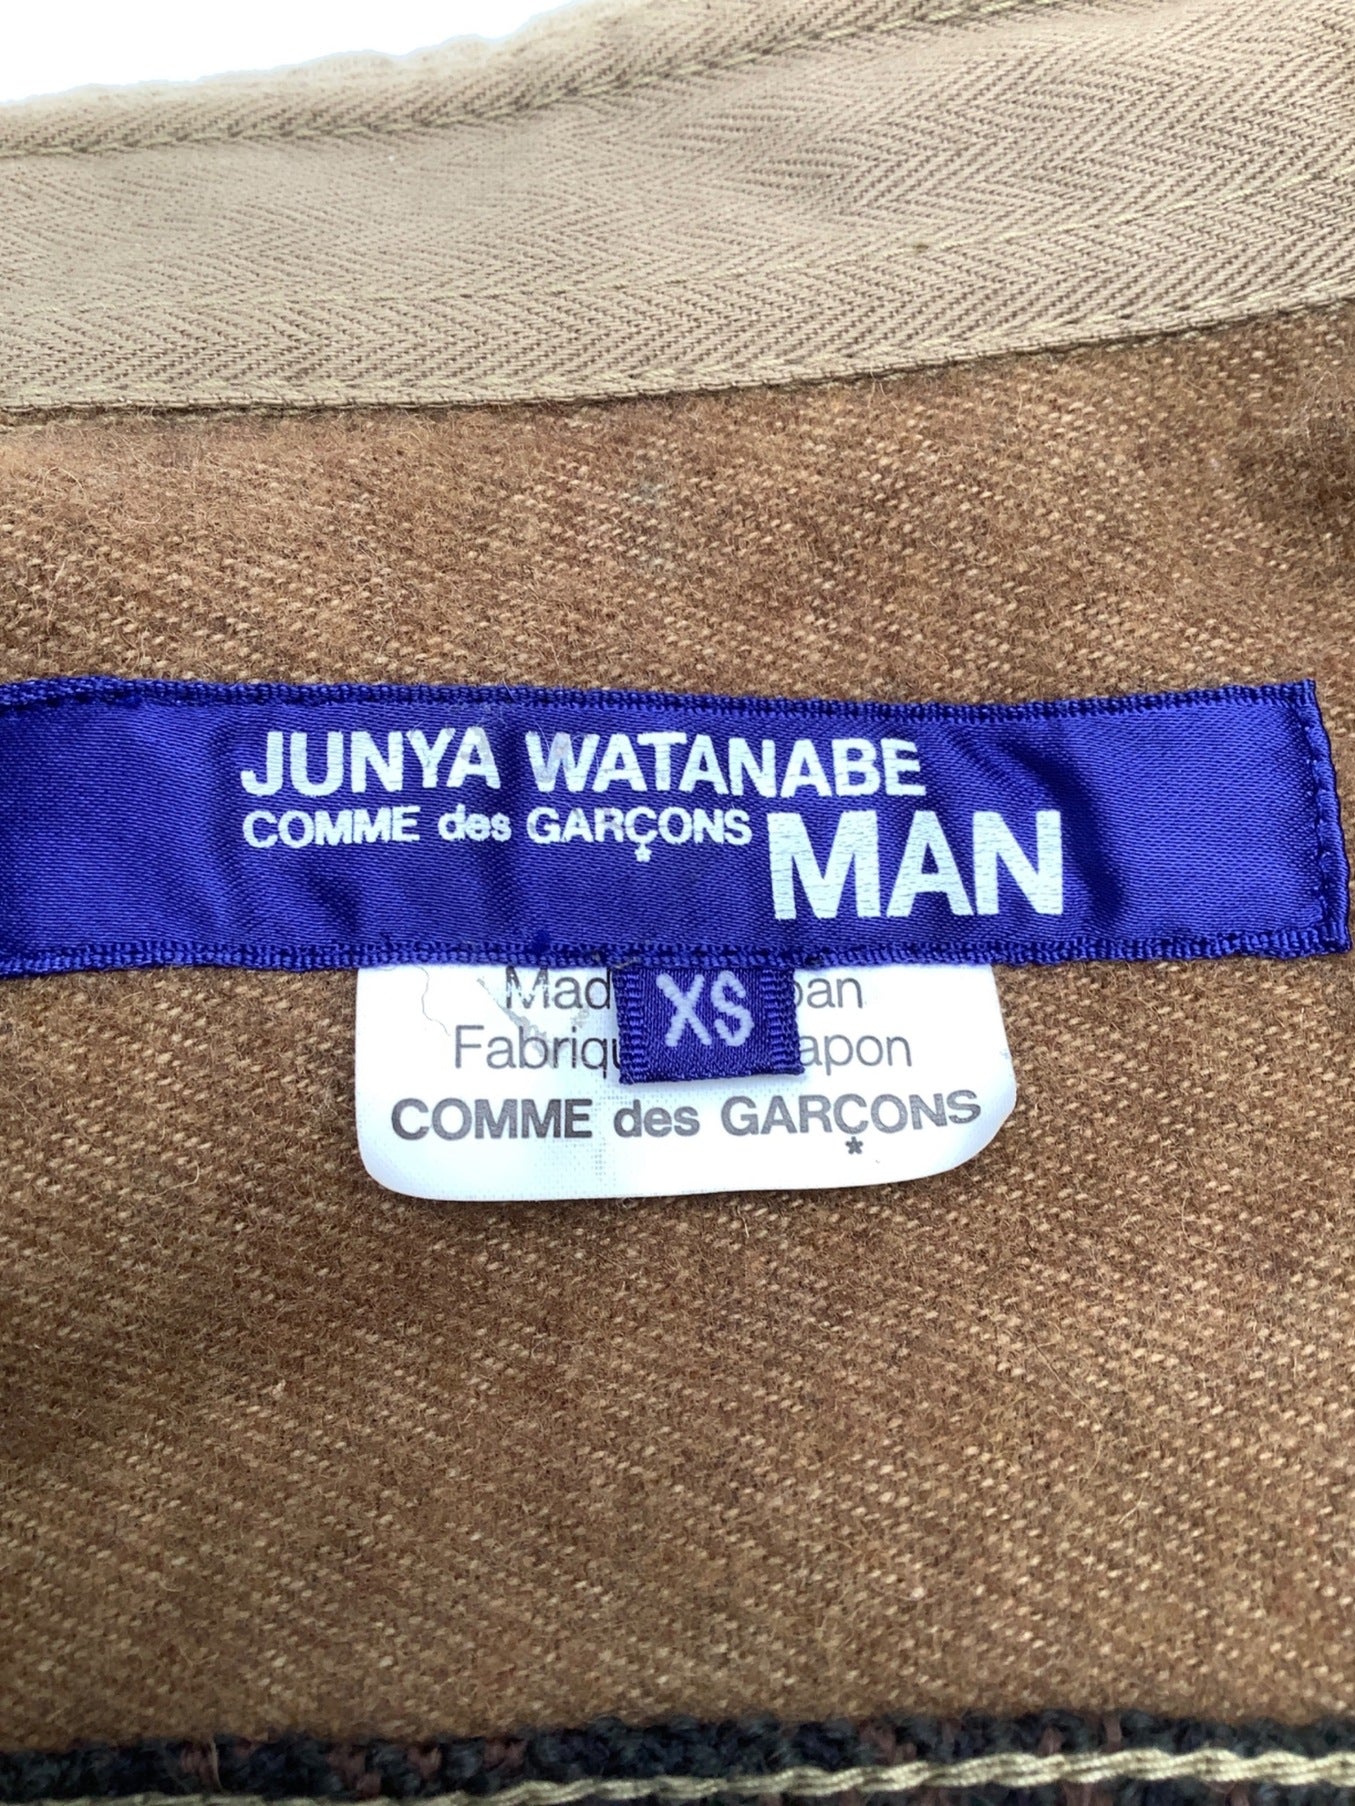 Comme des Garcons Junya Watanabe Man襯衫夾克WJ-B041